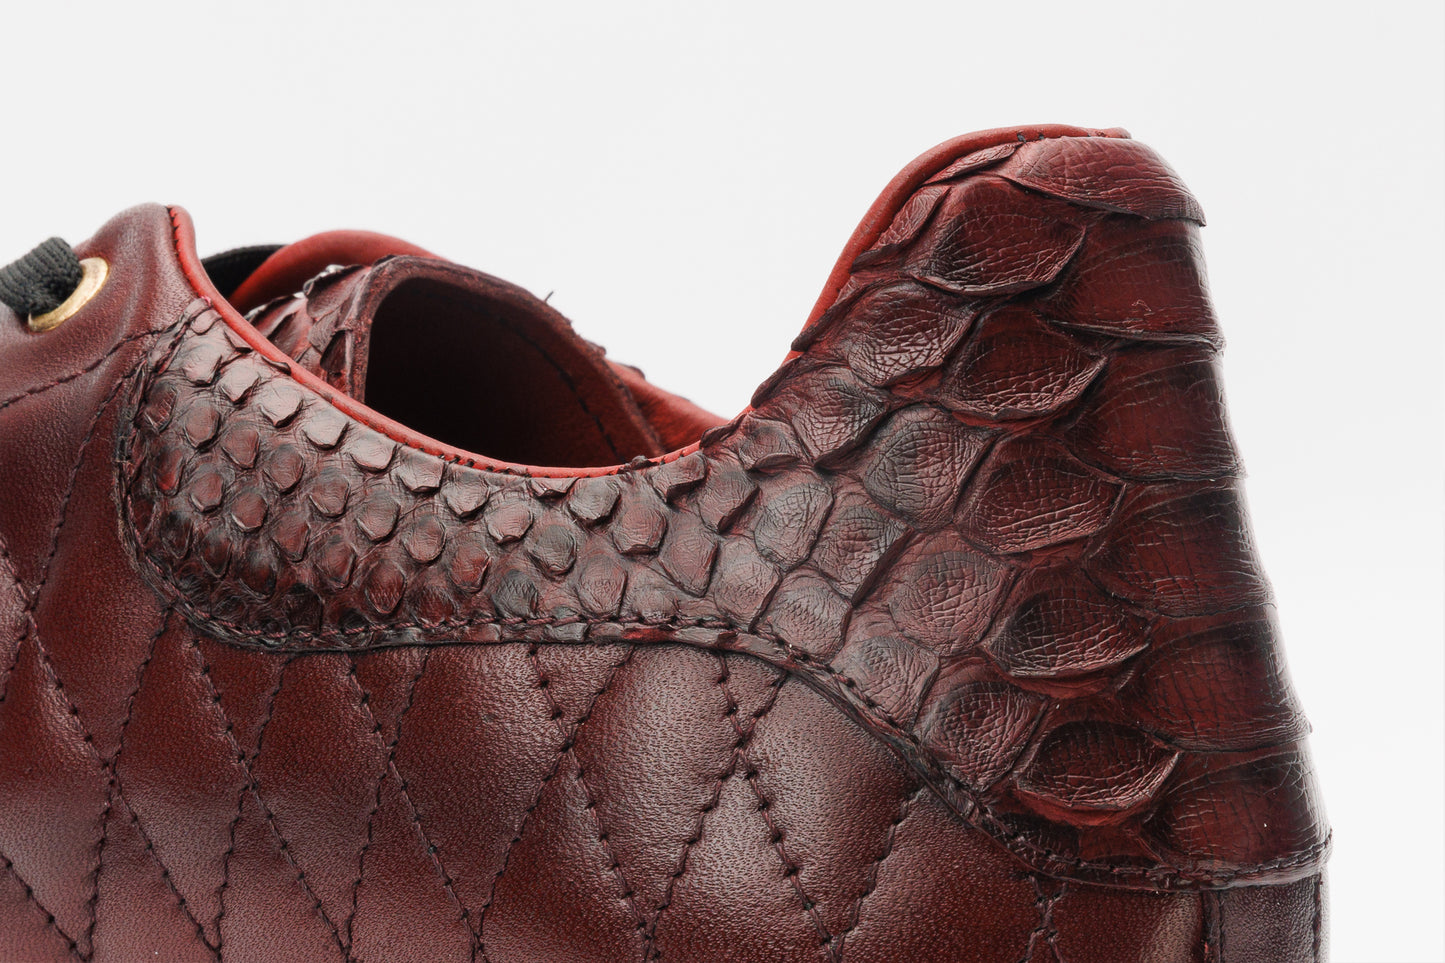 The Adler Burgundy Snk Leather Men Sneaker Limited Edition